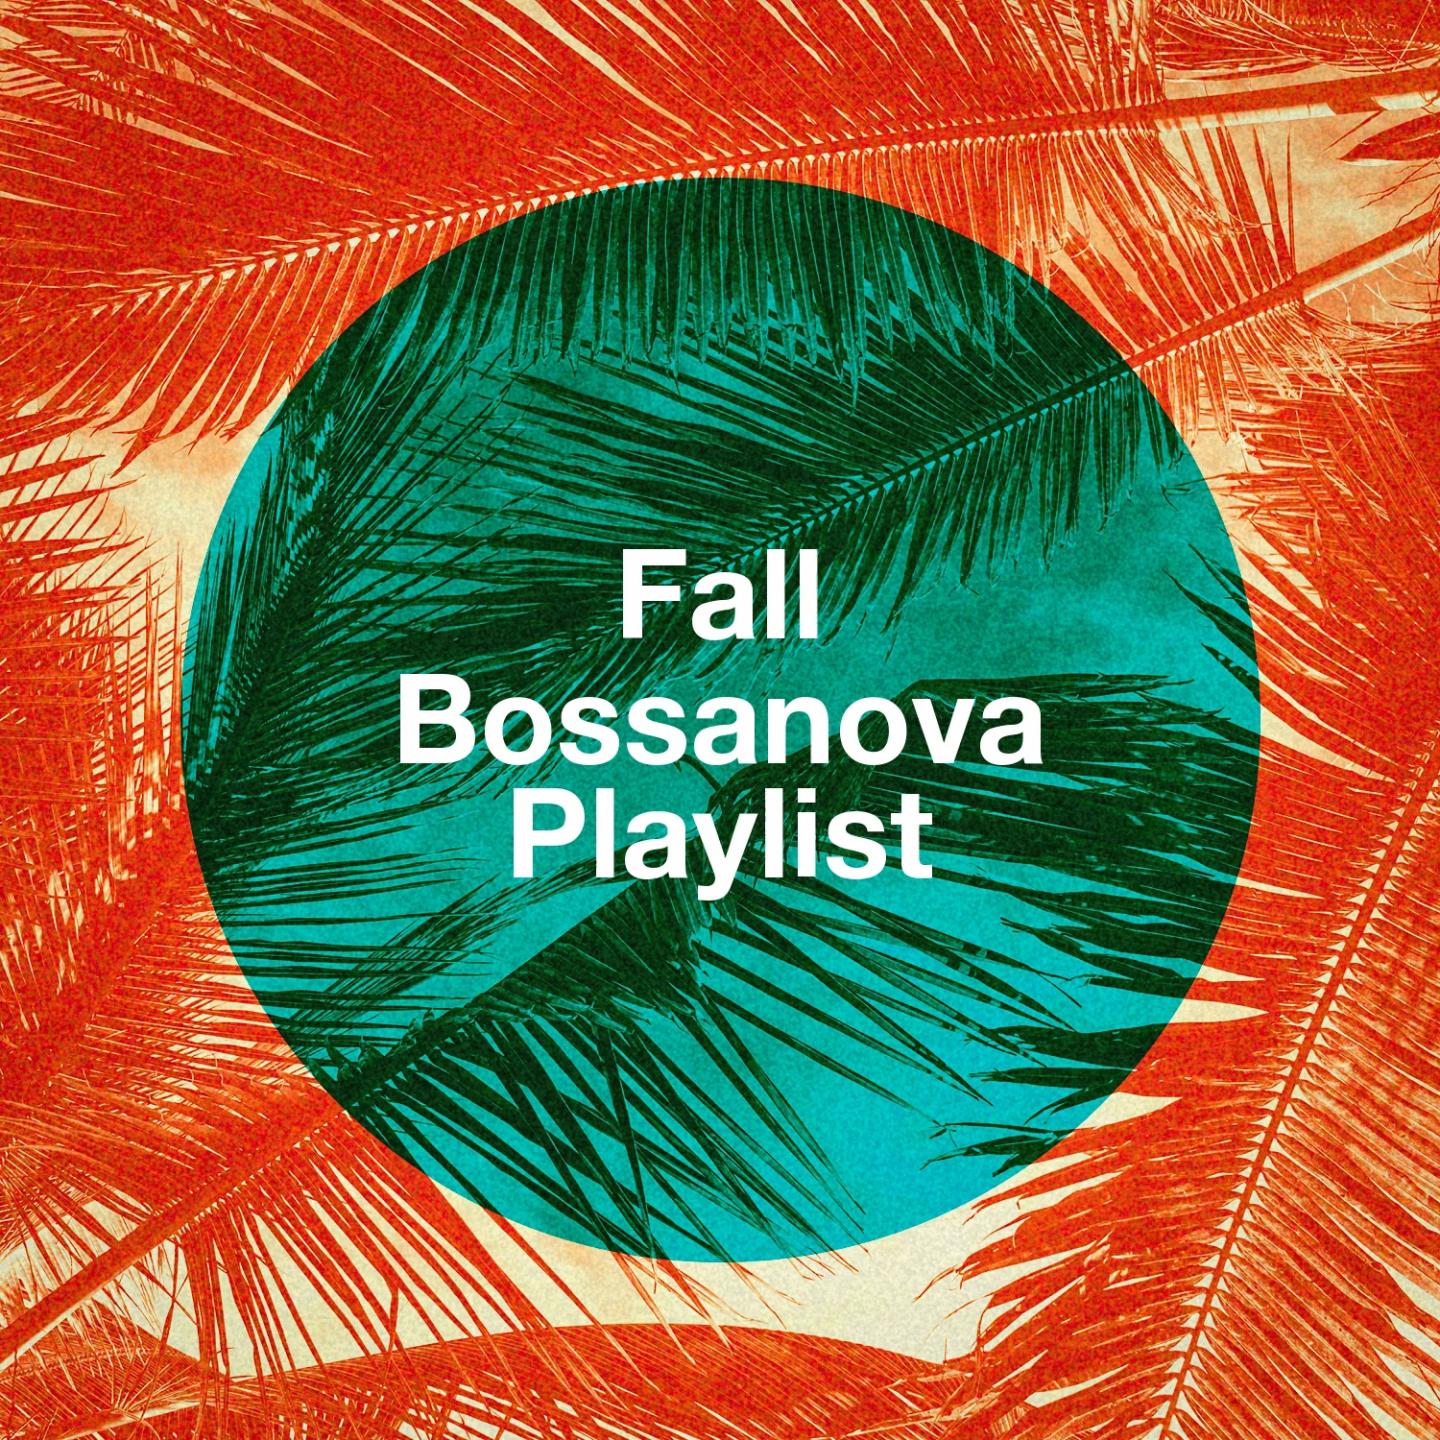 Fall Bossanova Playlist